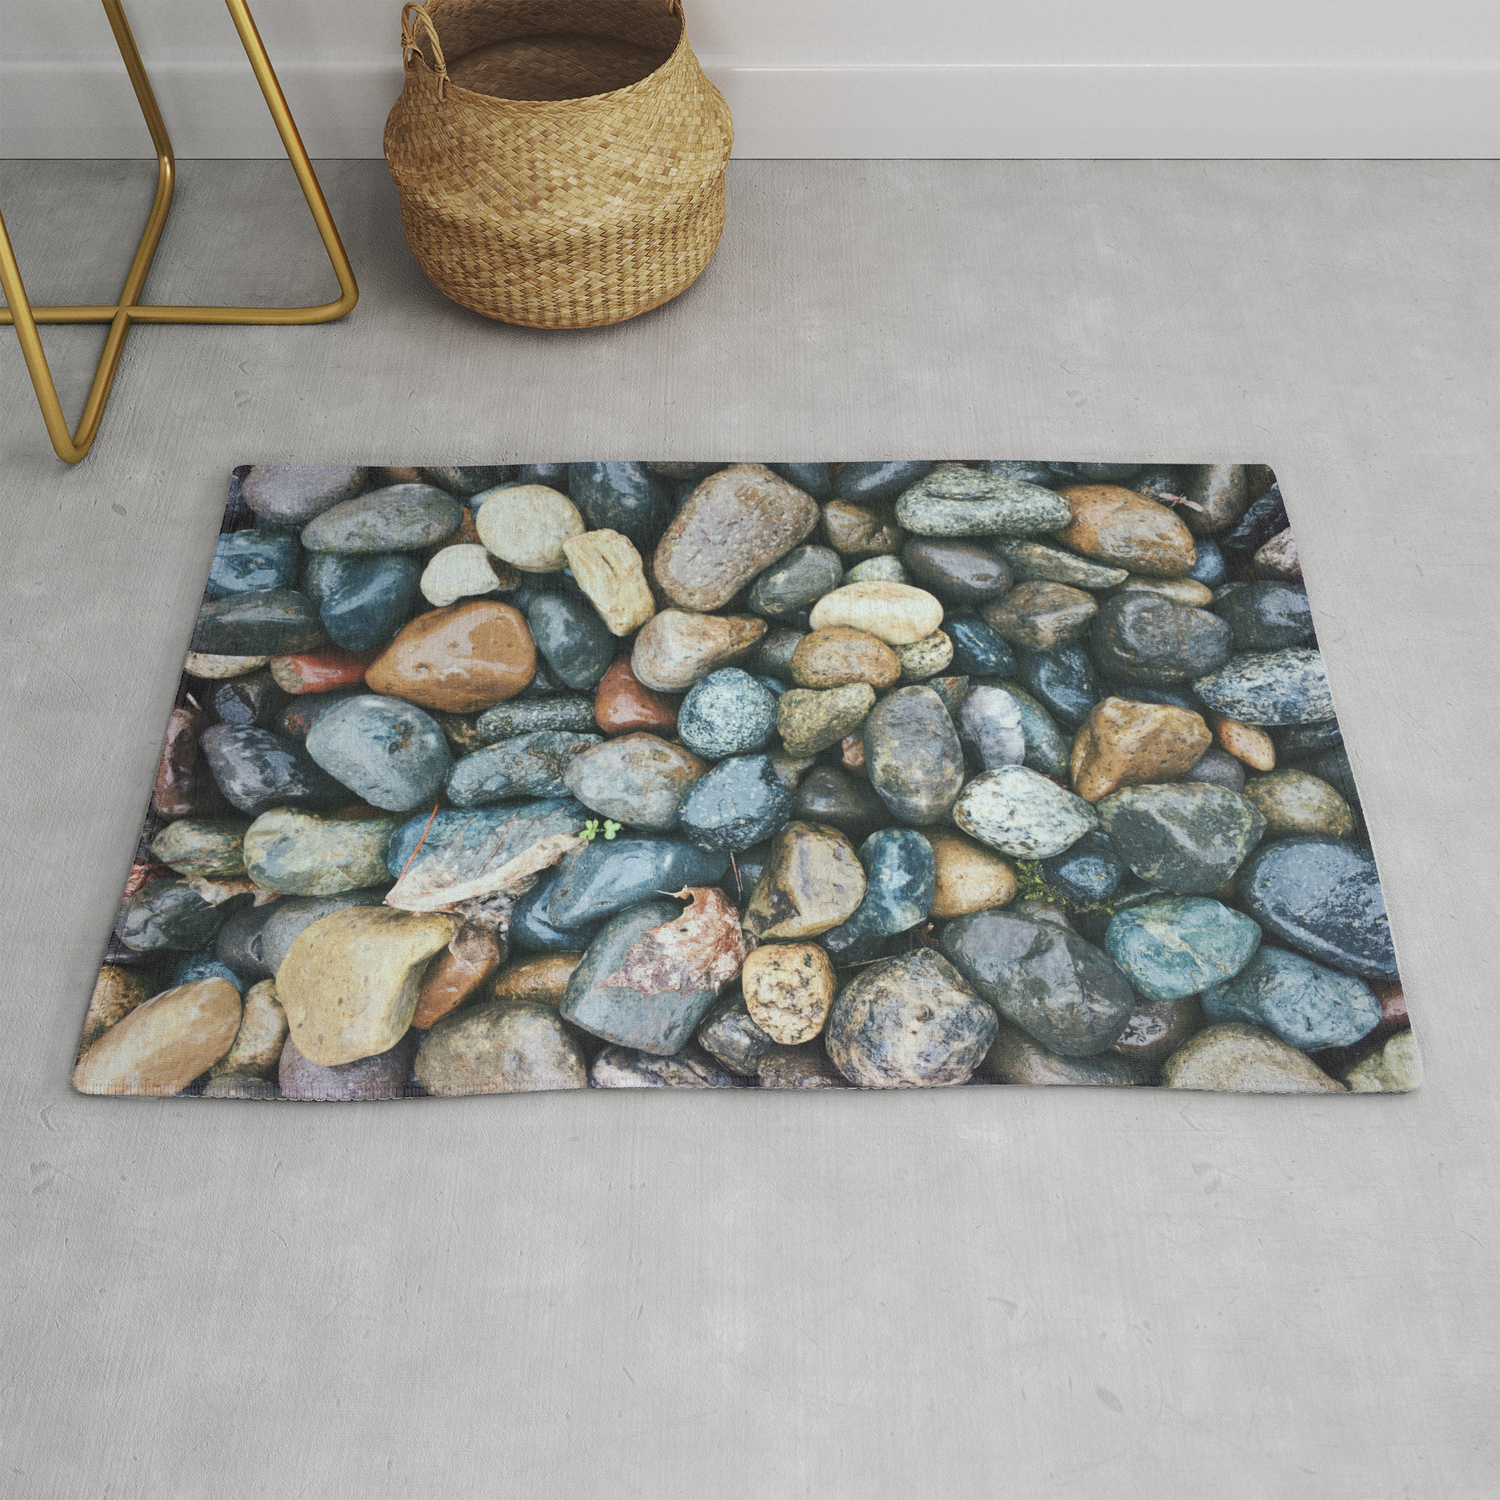 The mat of sea pebbles